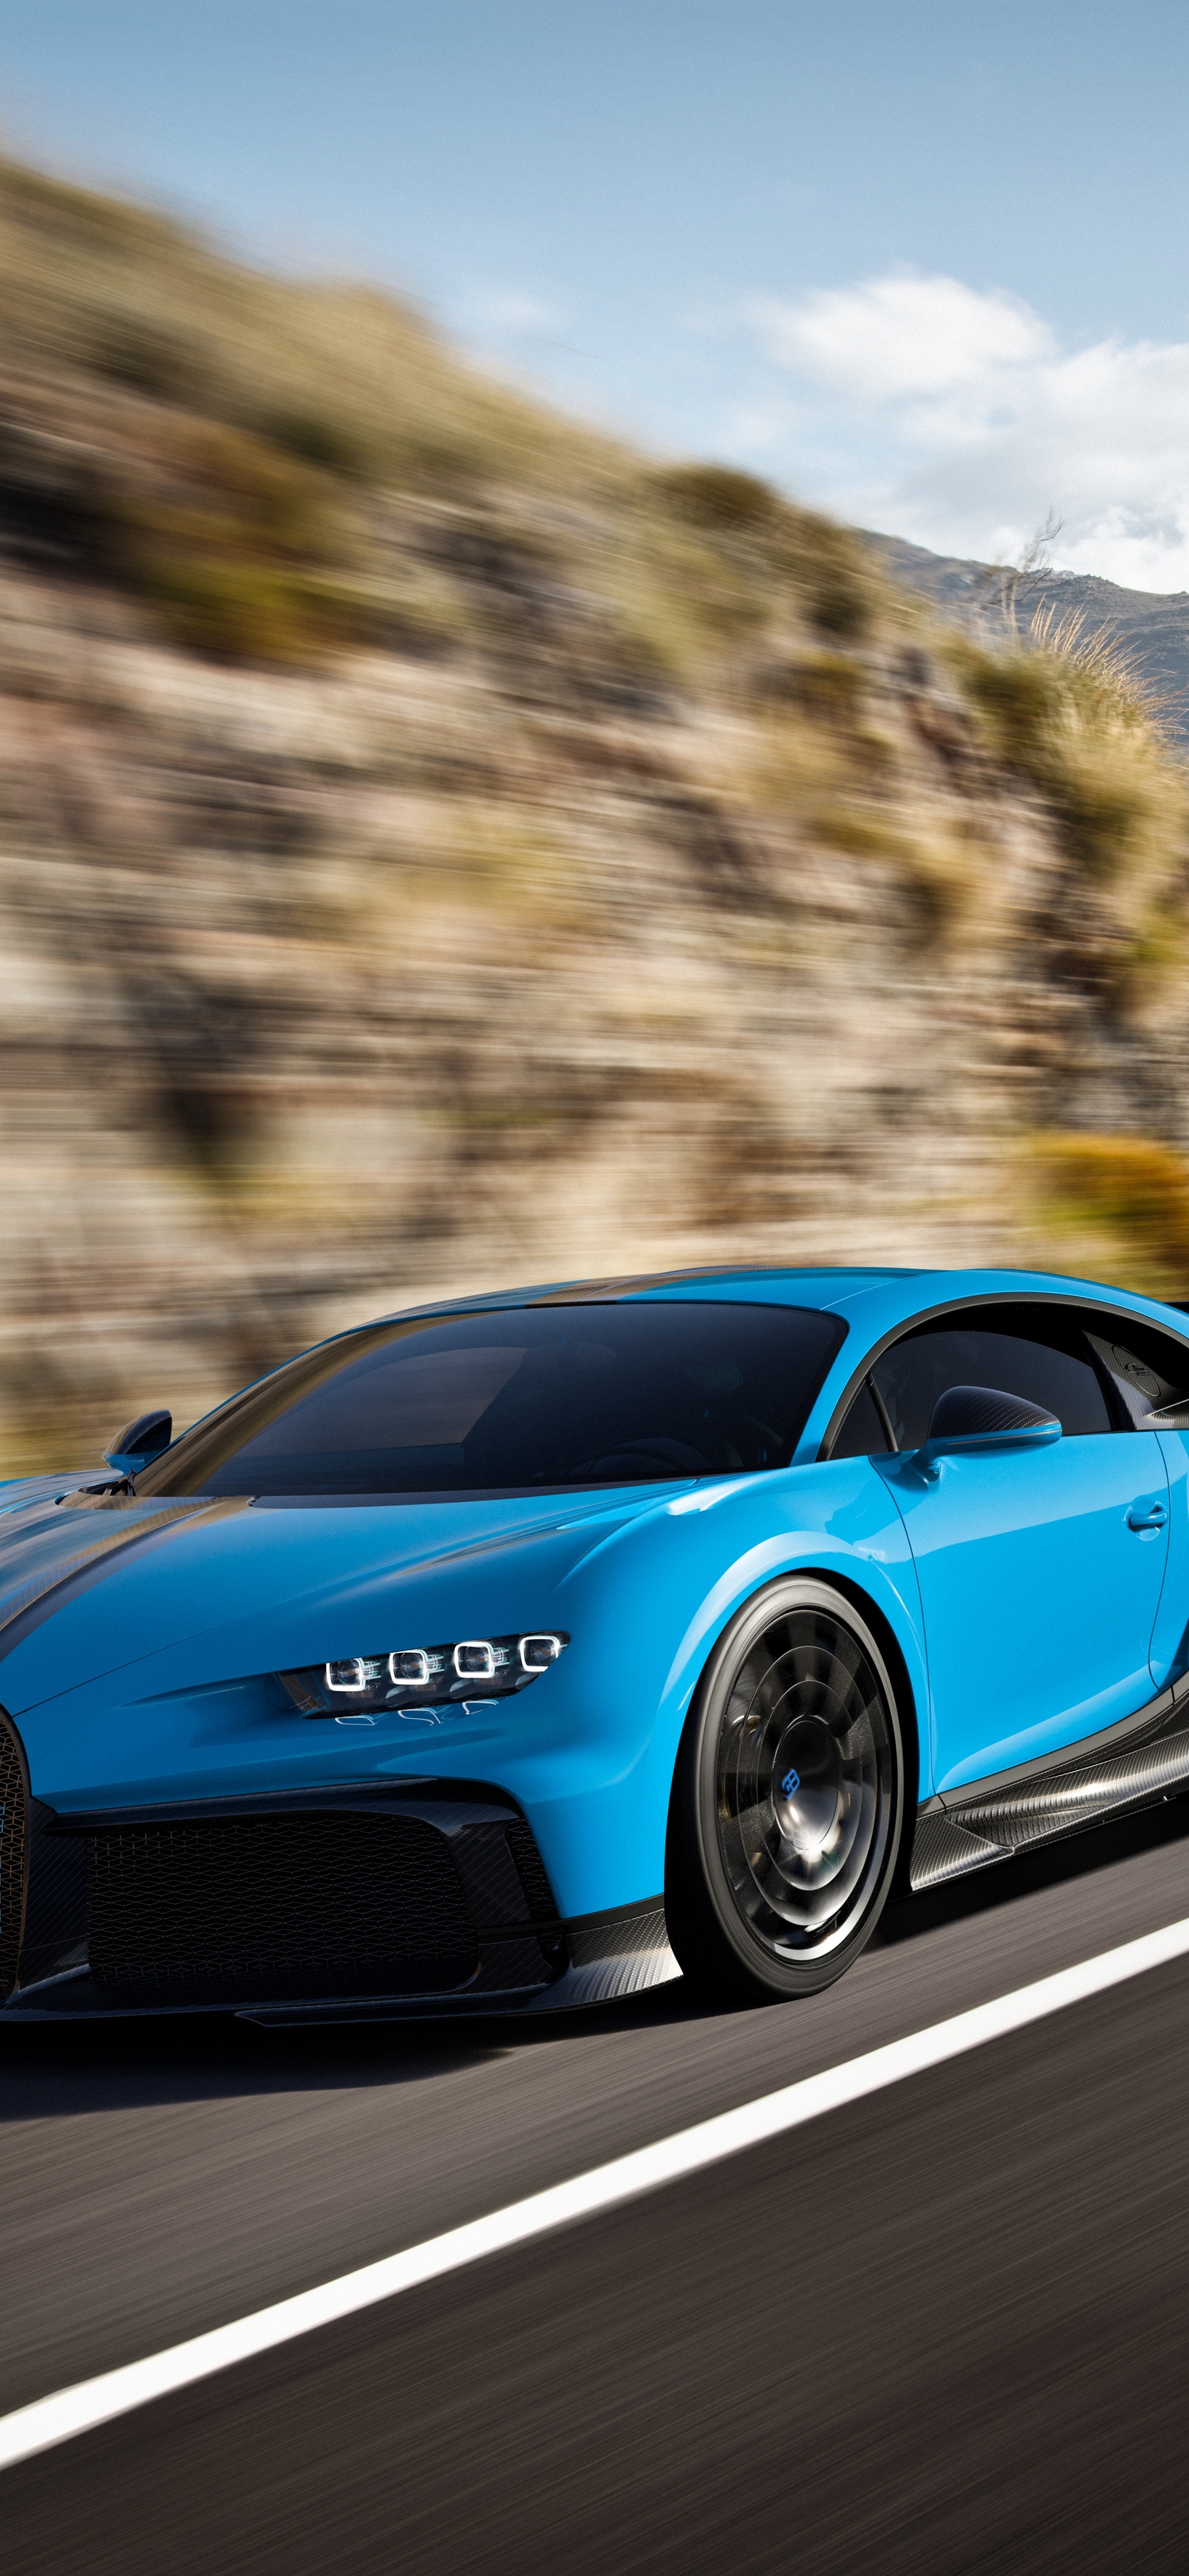 Картинка: Bugatti, Chiron Pur Sport, скорость, дорога, горы, размытие